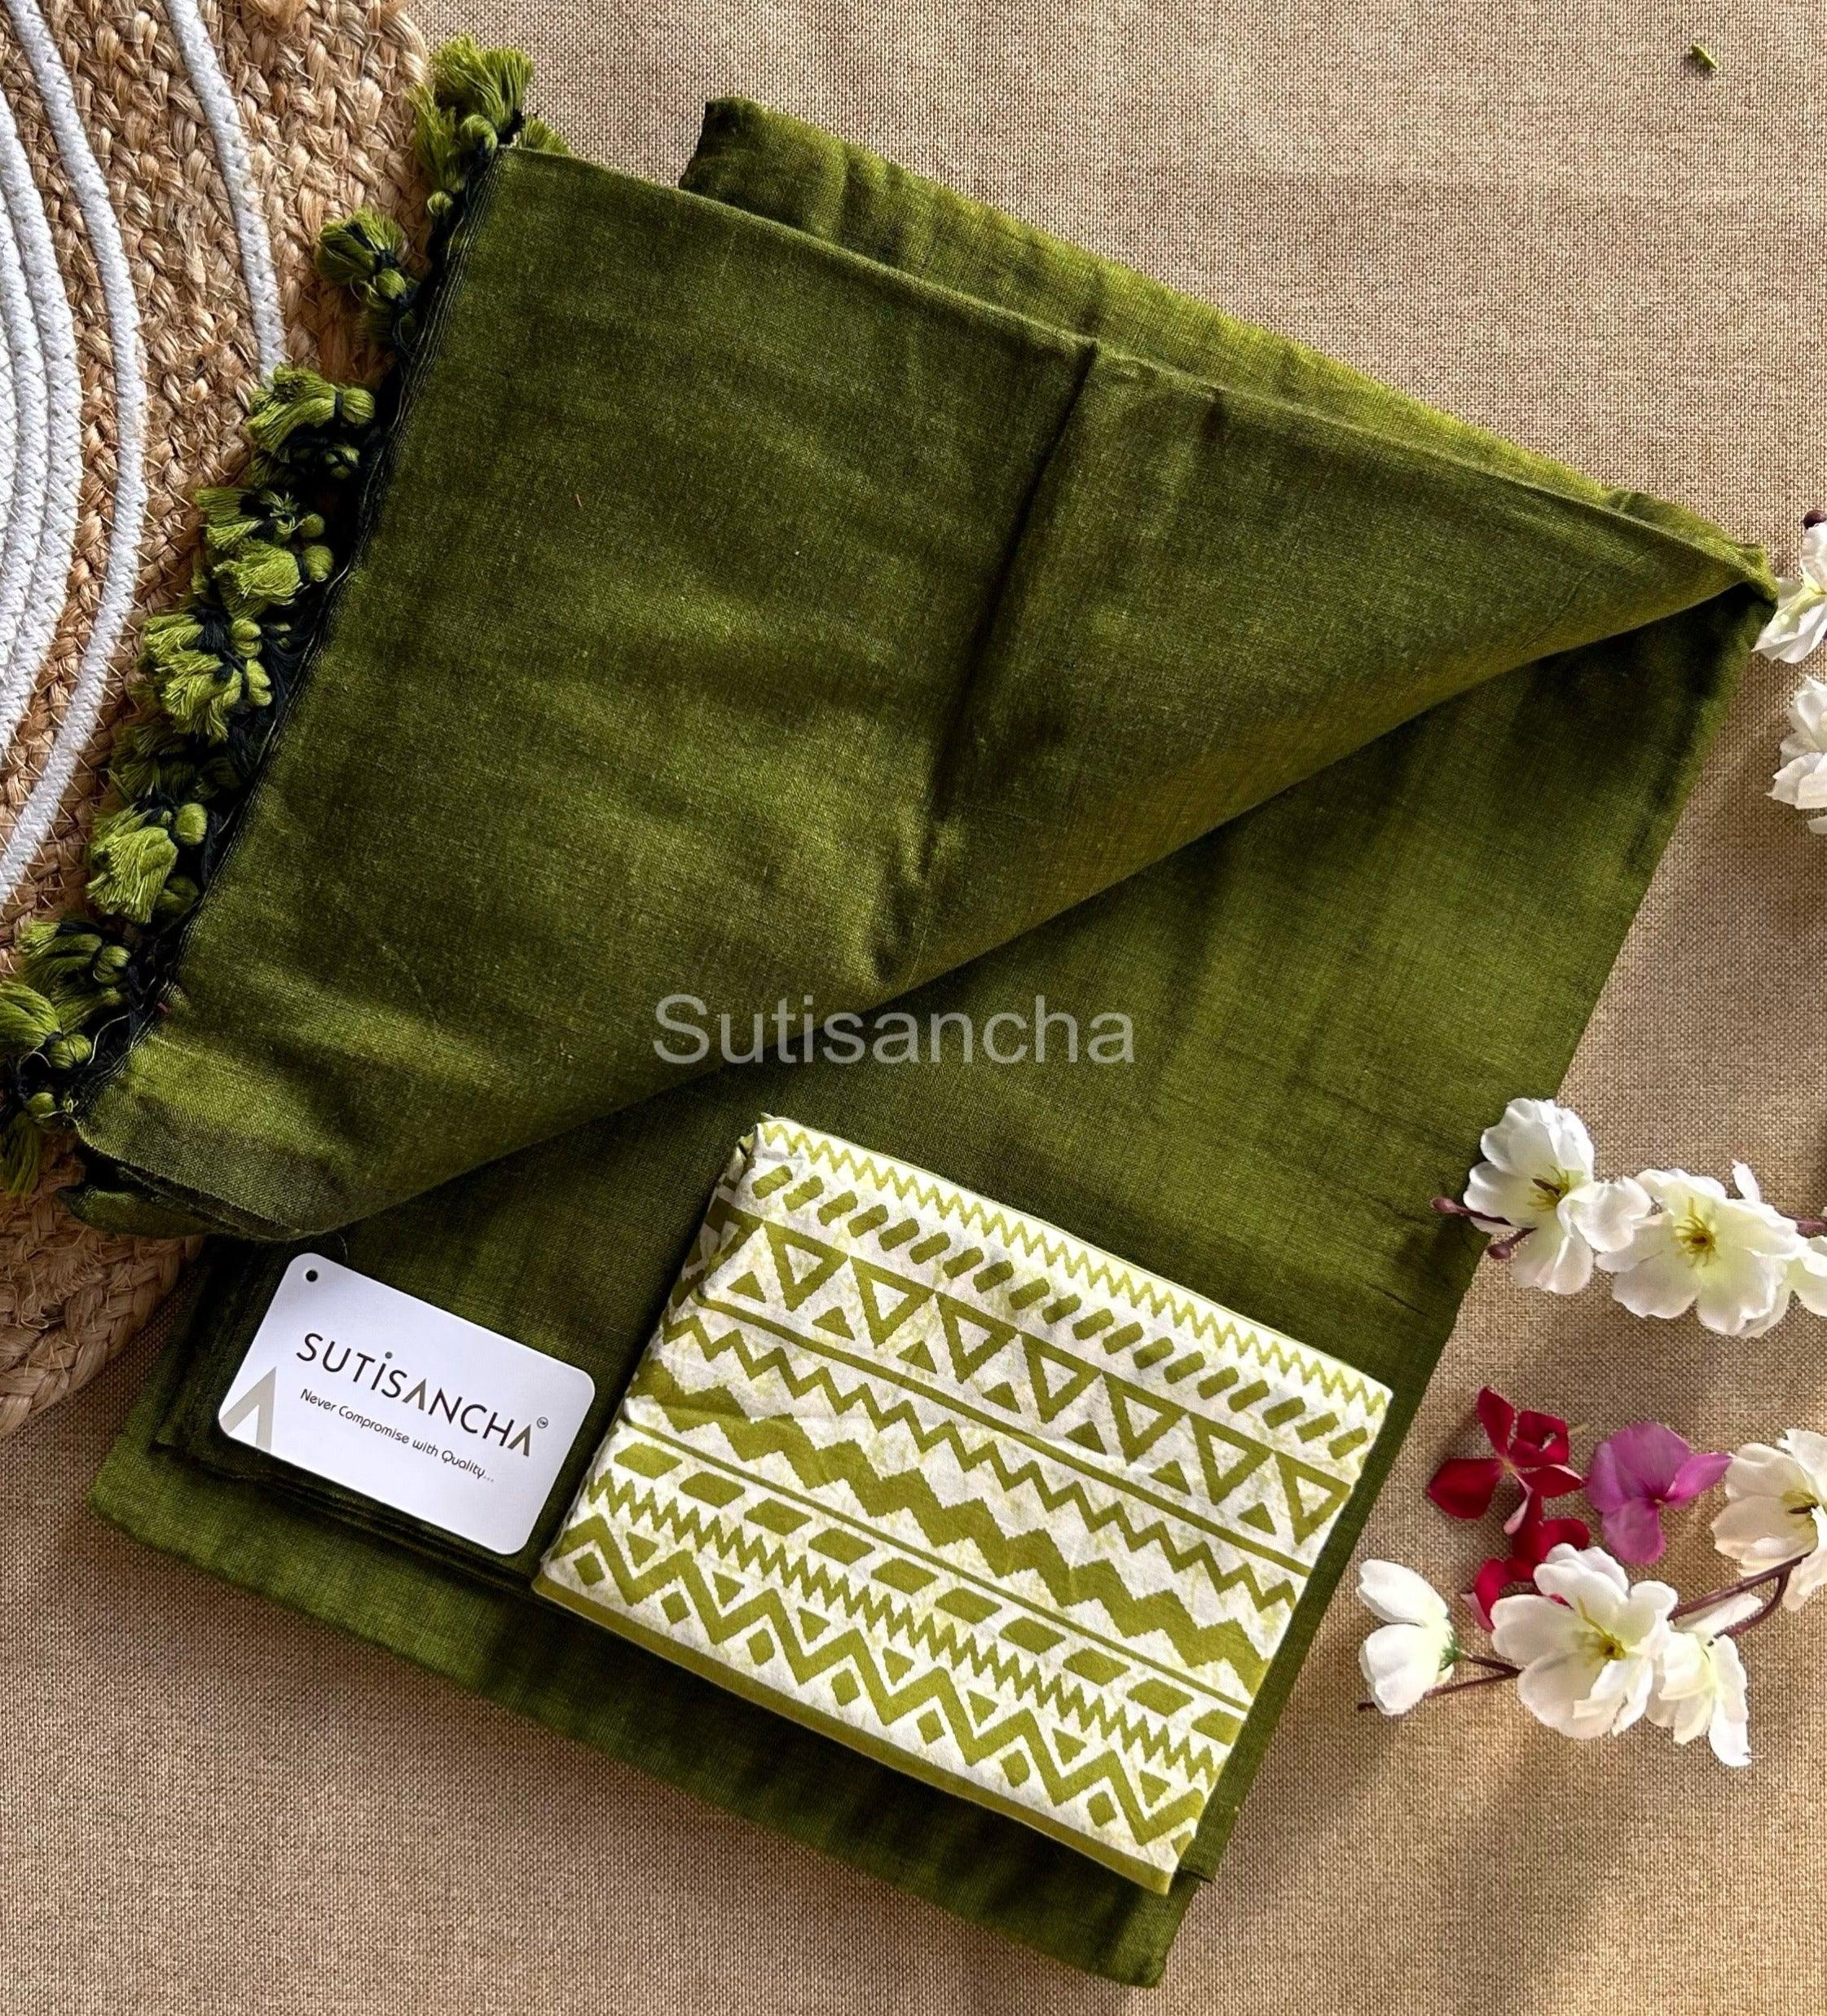 Sutisancha Mahendi Khadi with Design Blouse - Suti Sancha